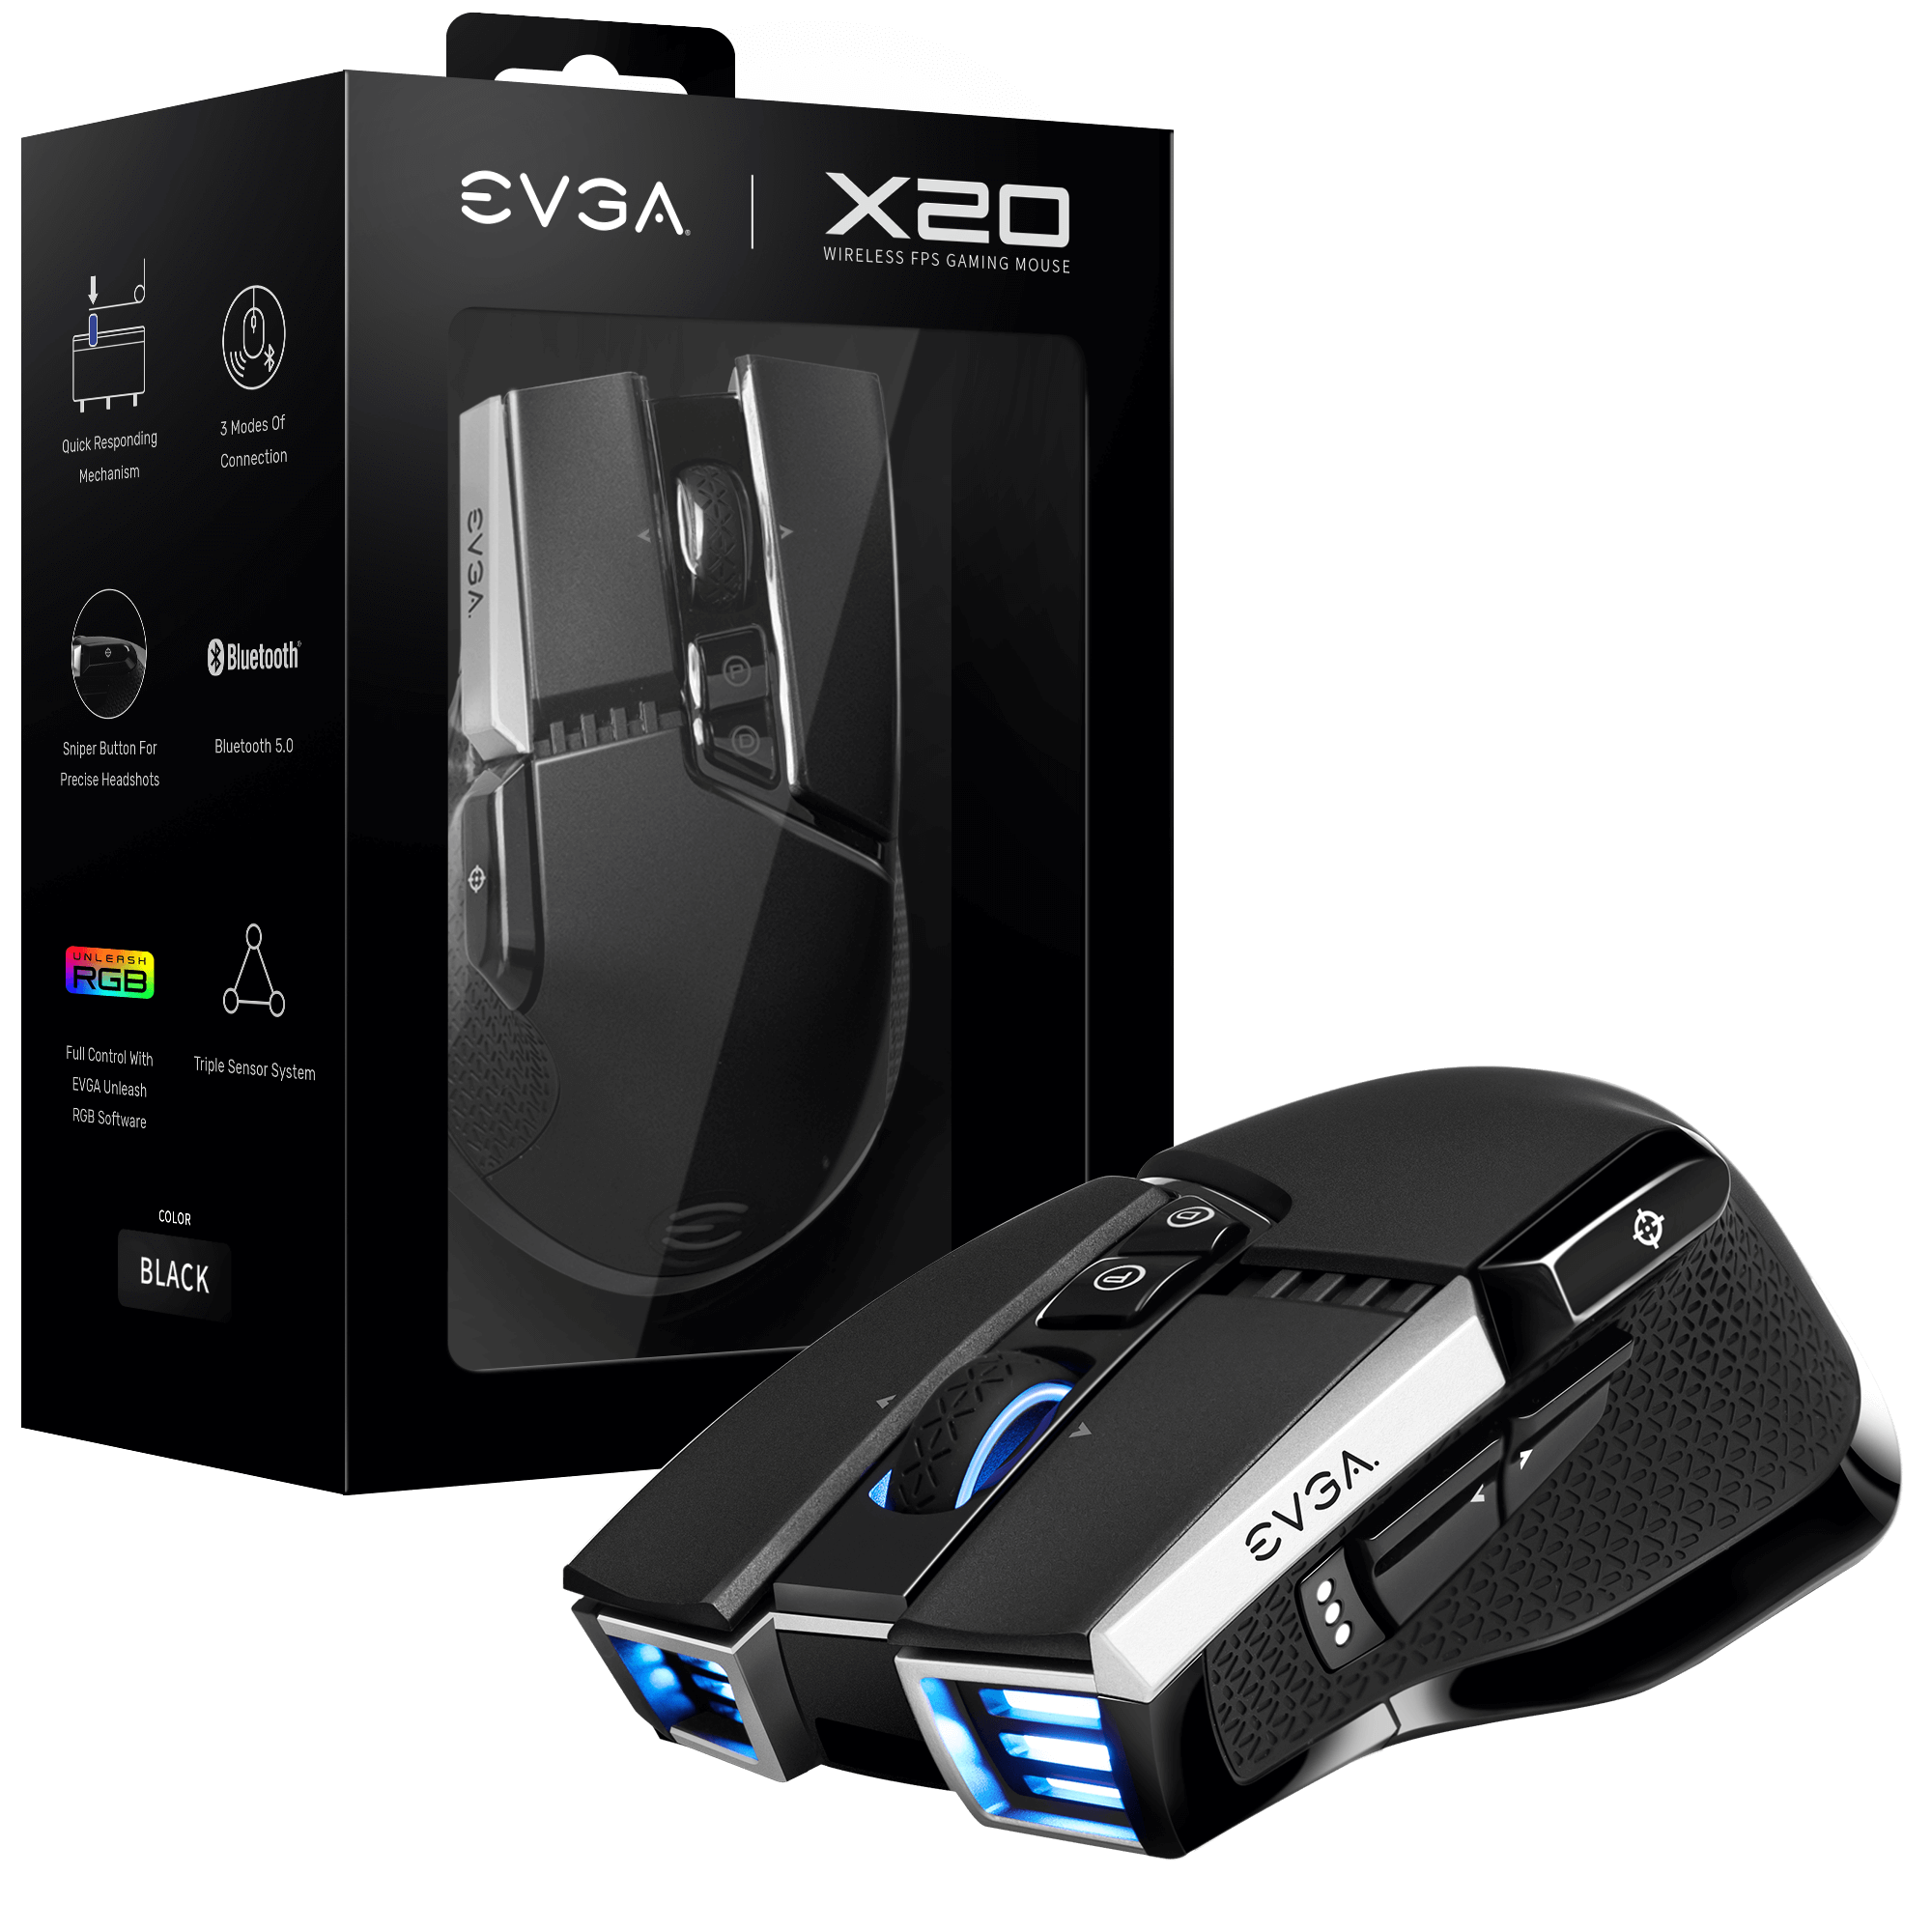 EVGA X20